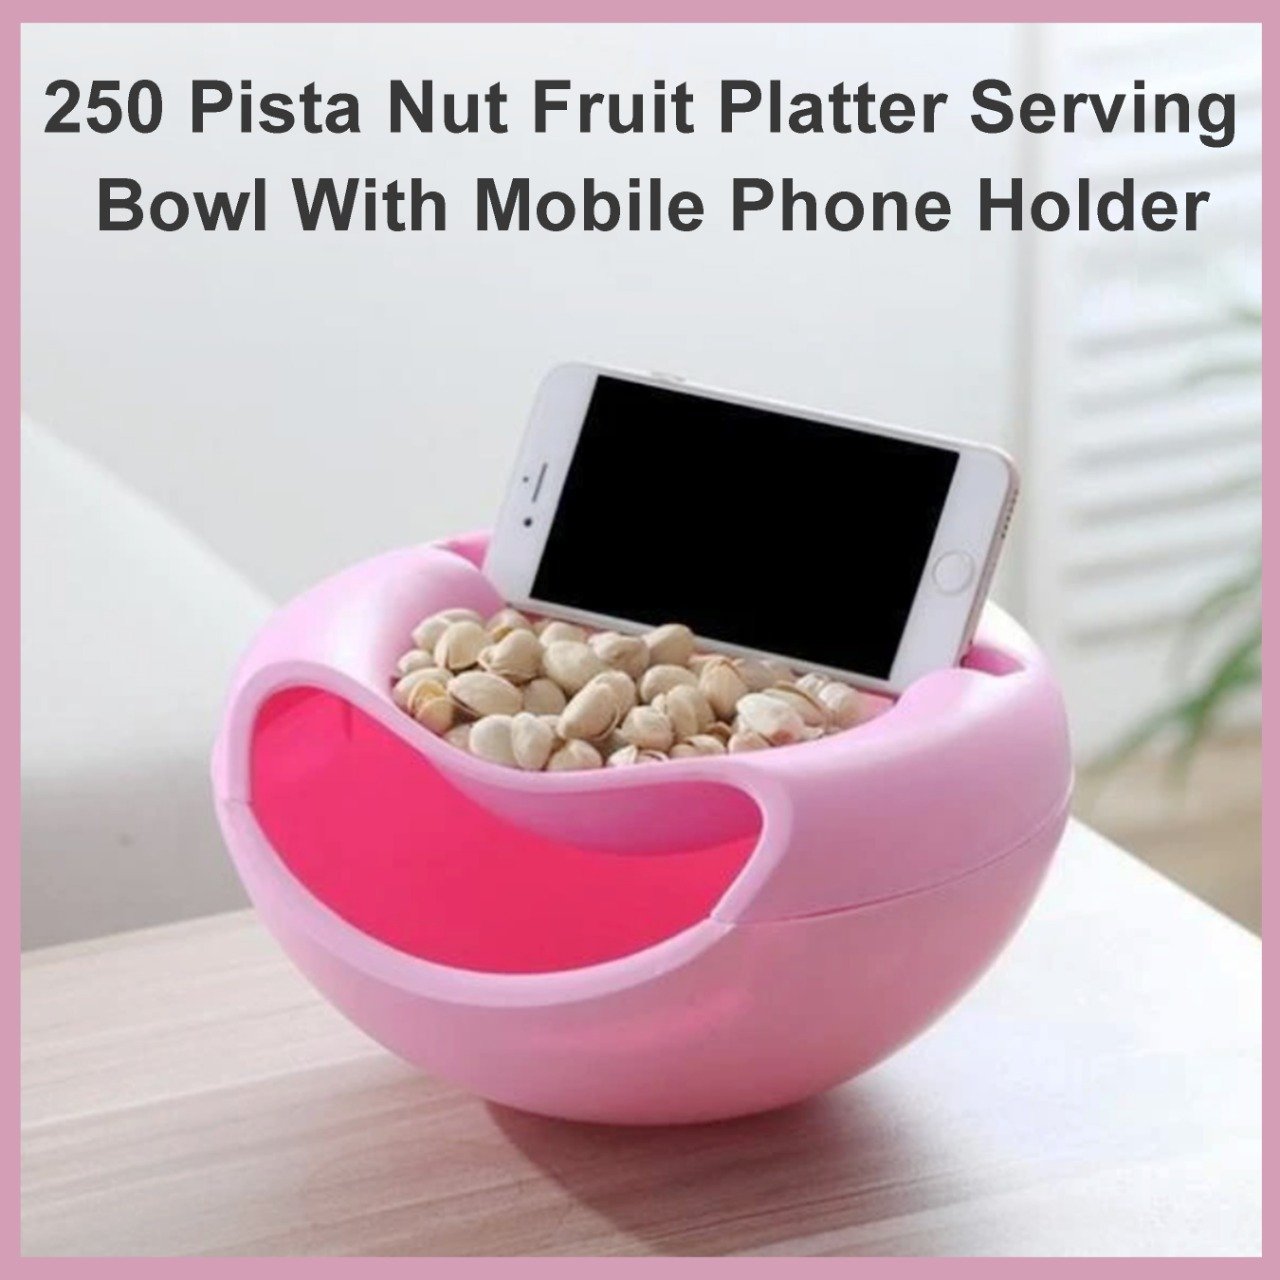 0250 Pista Nut Fruit Platter Serving Bowl With Mobile Phone Holder by HomeFast - SkyShopy